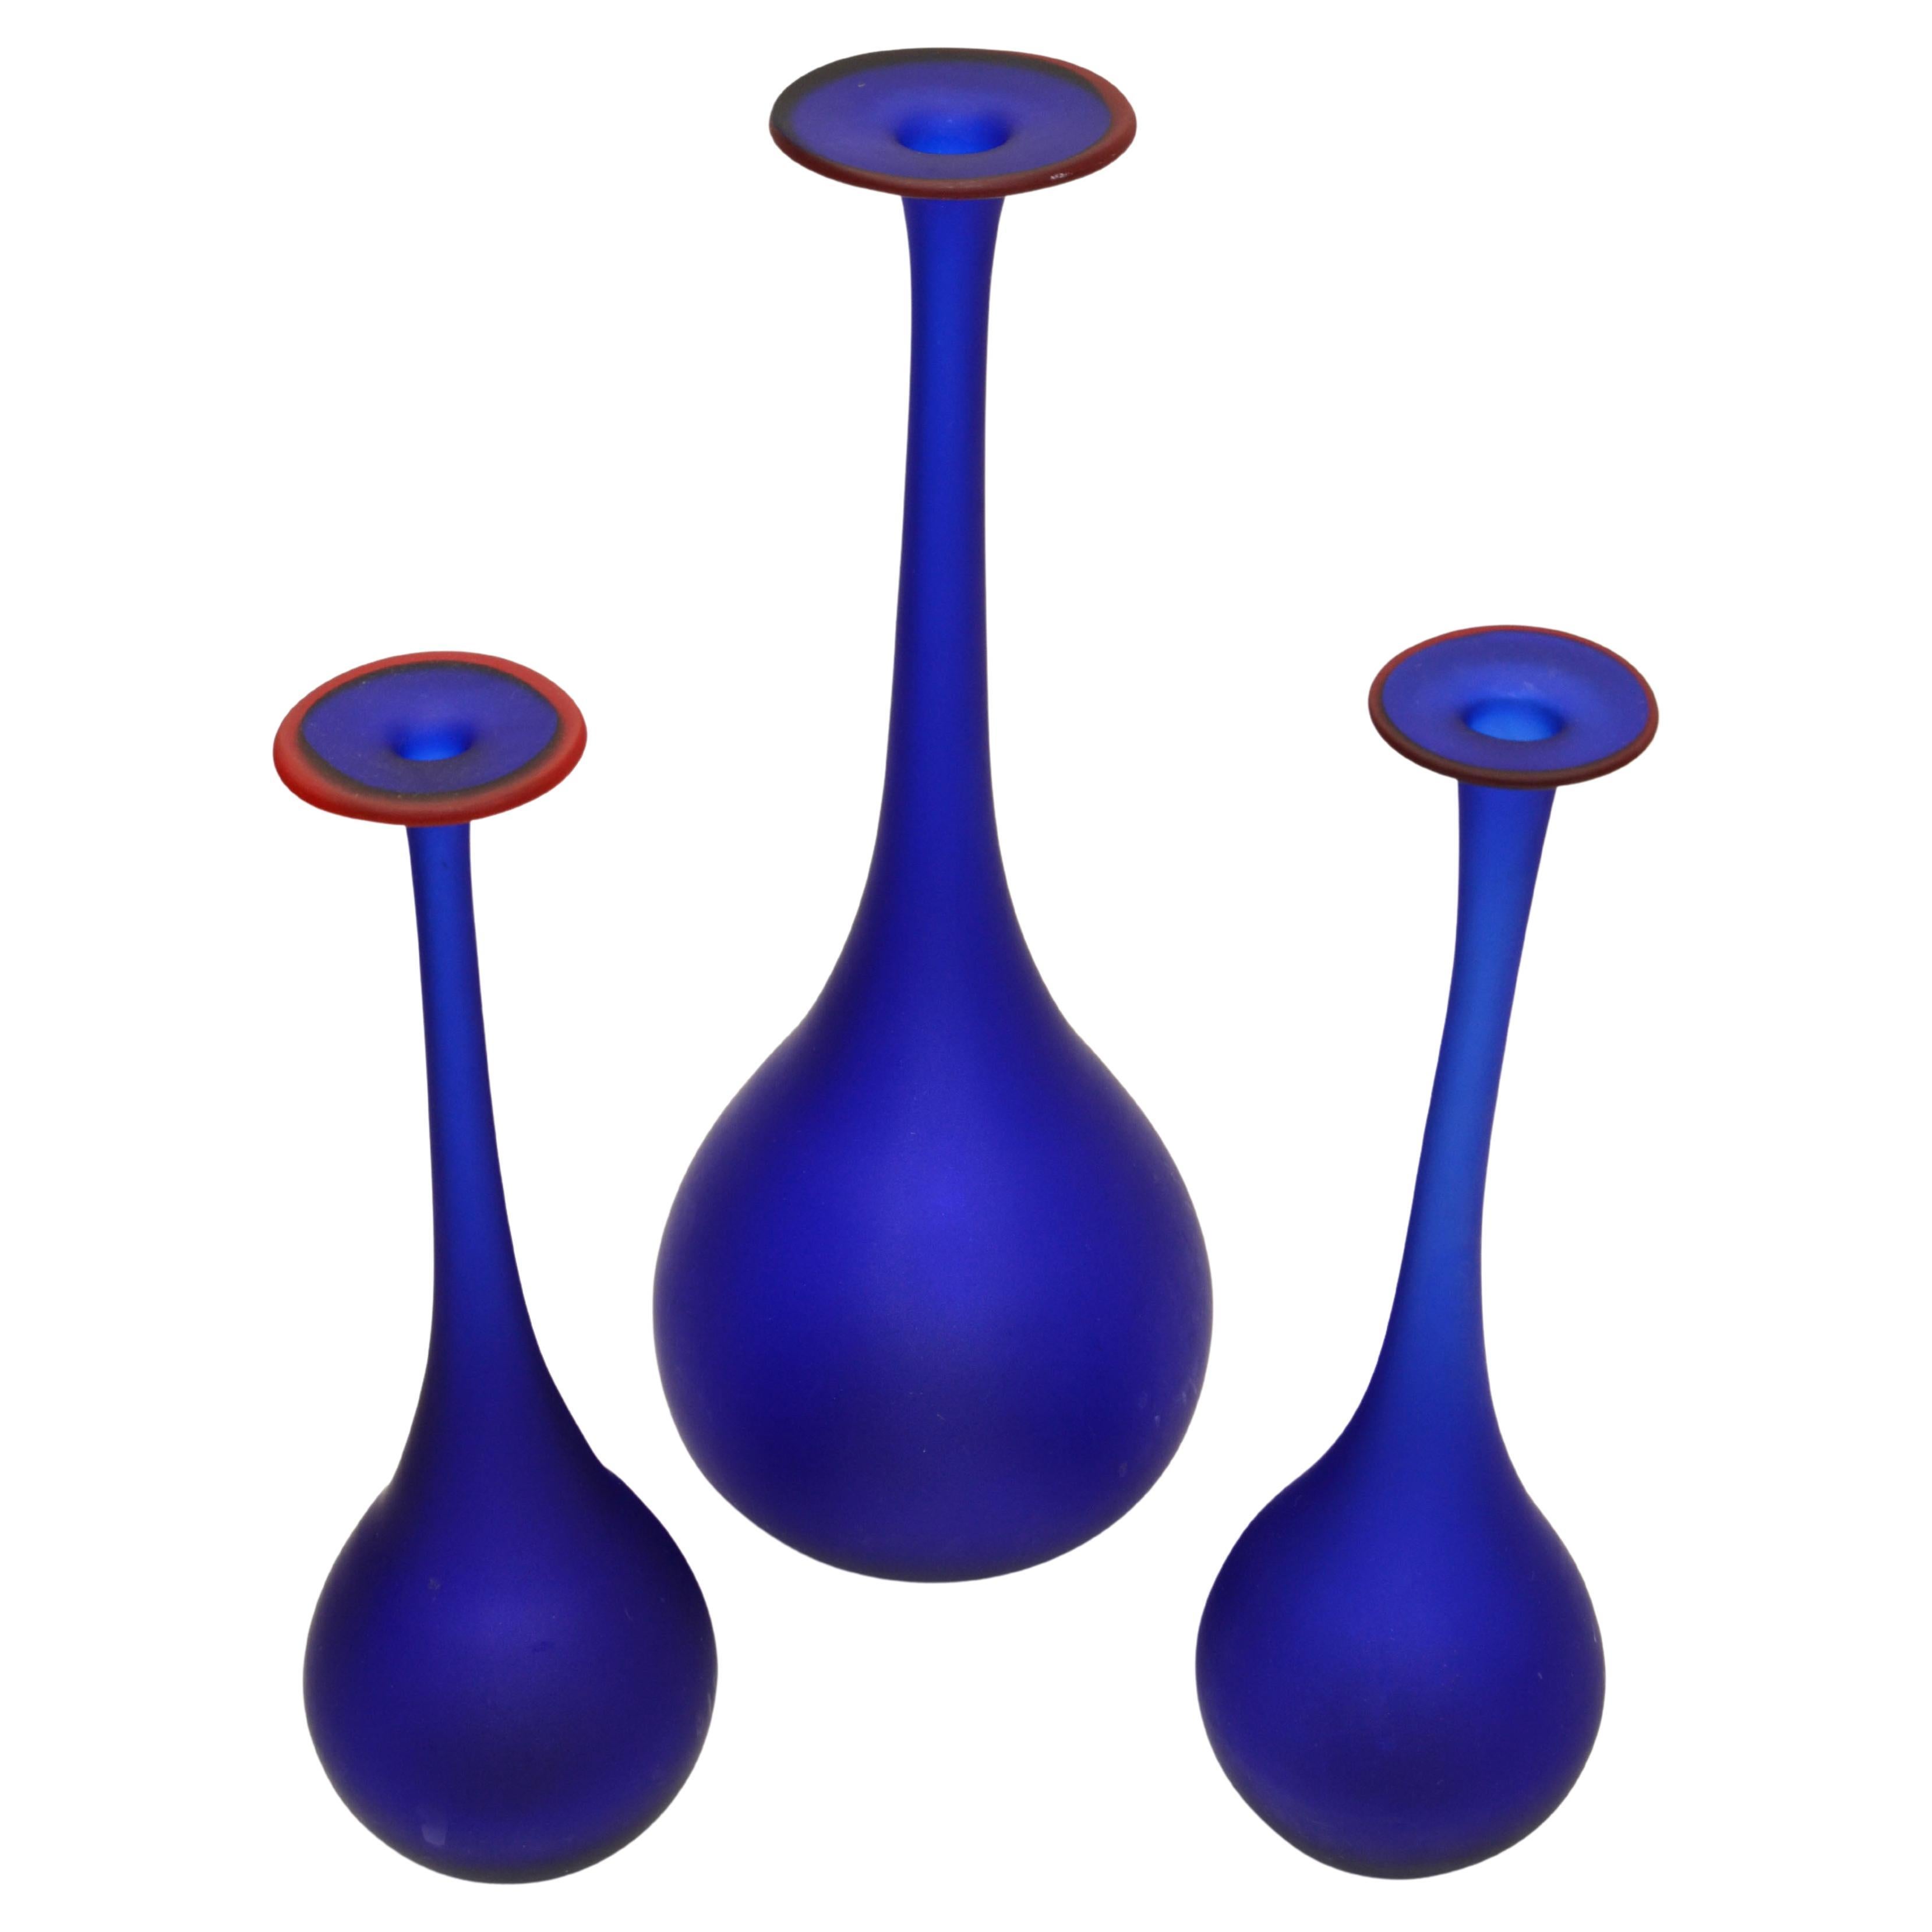 3 Nesting Vases Moretti Style Translucent Blue & Red Satin Glass Bud Vases Italy